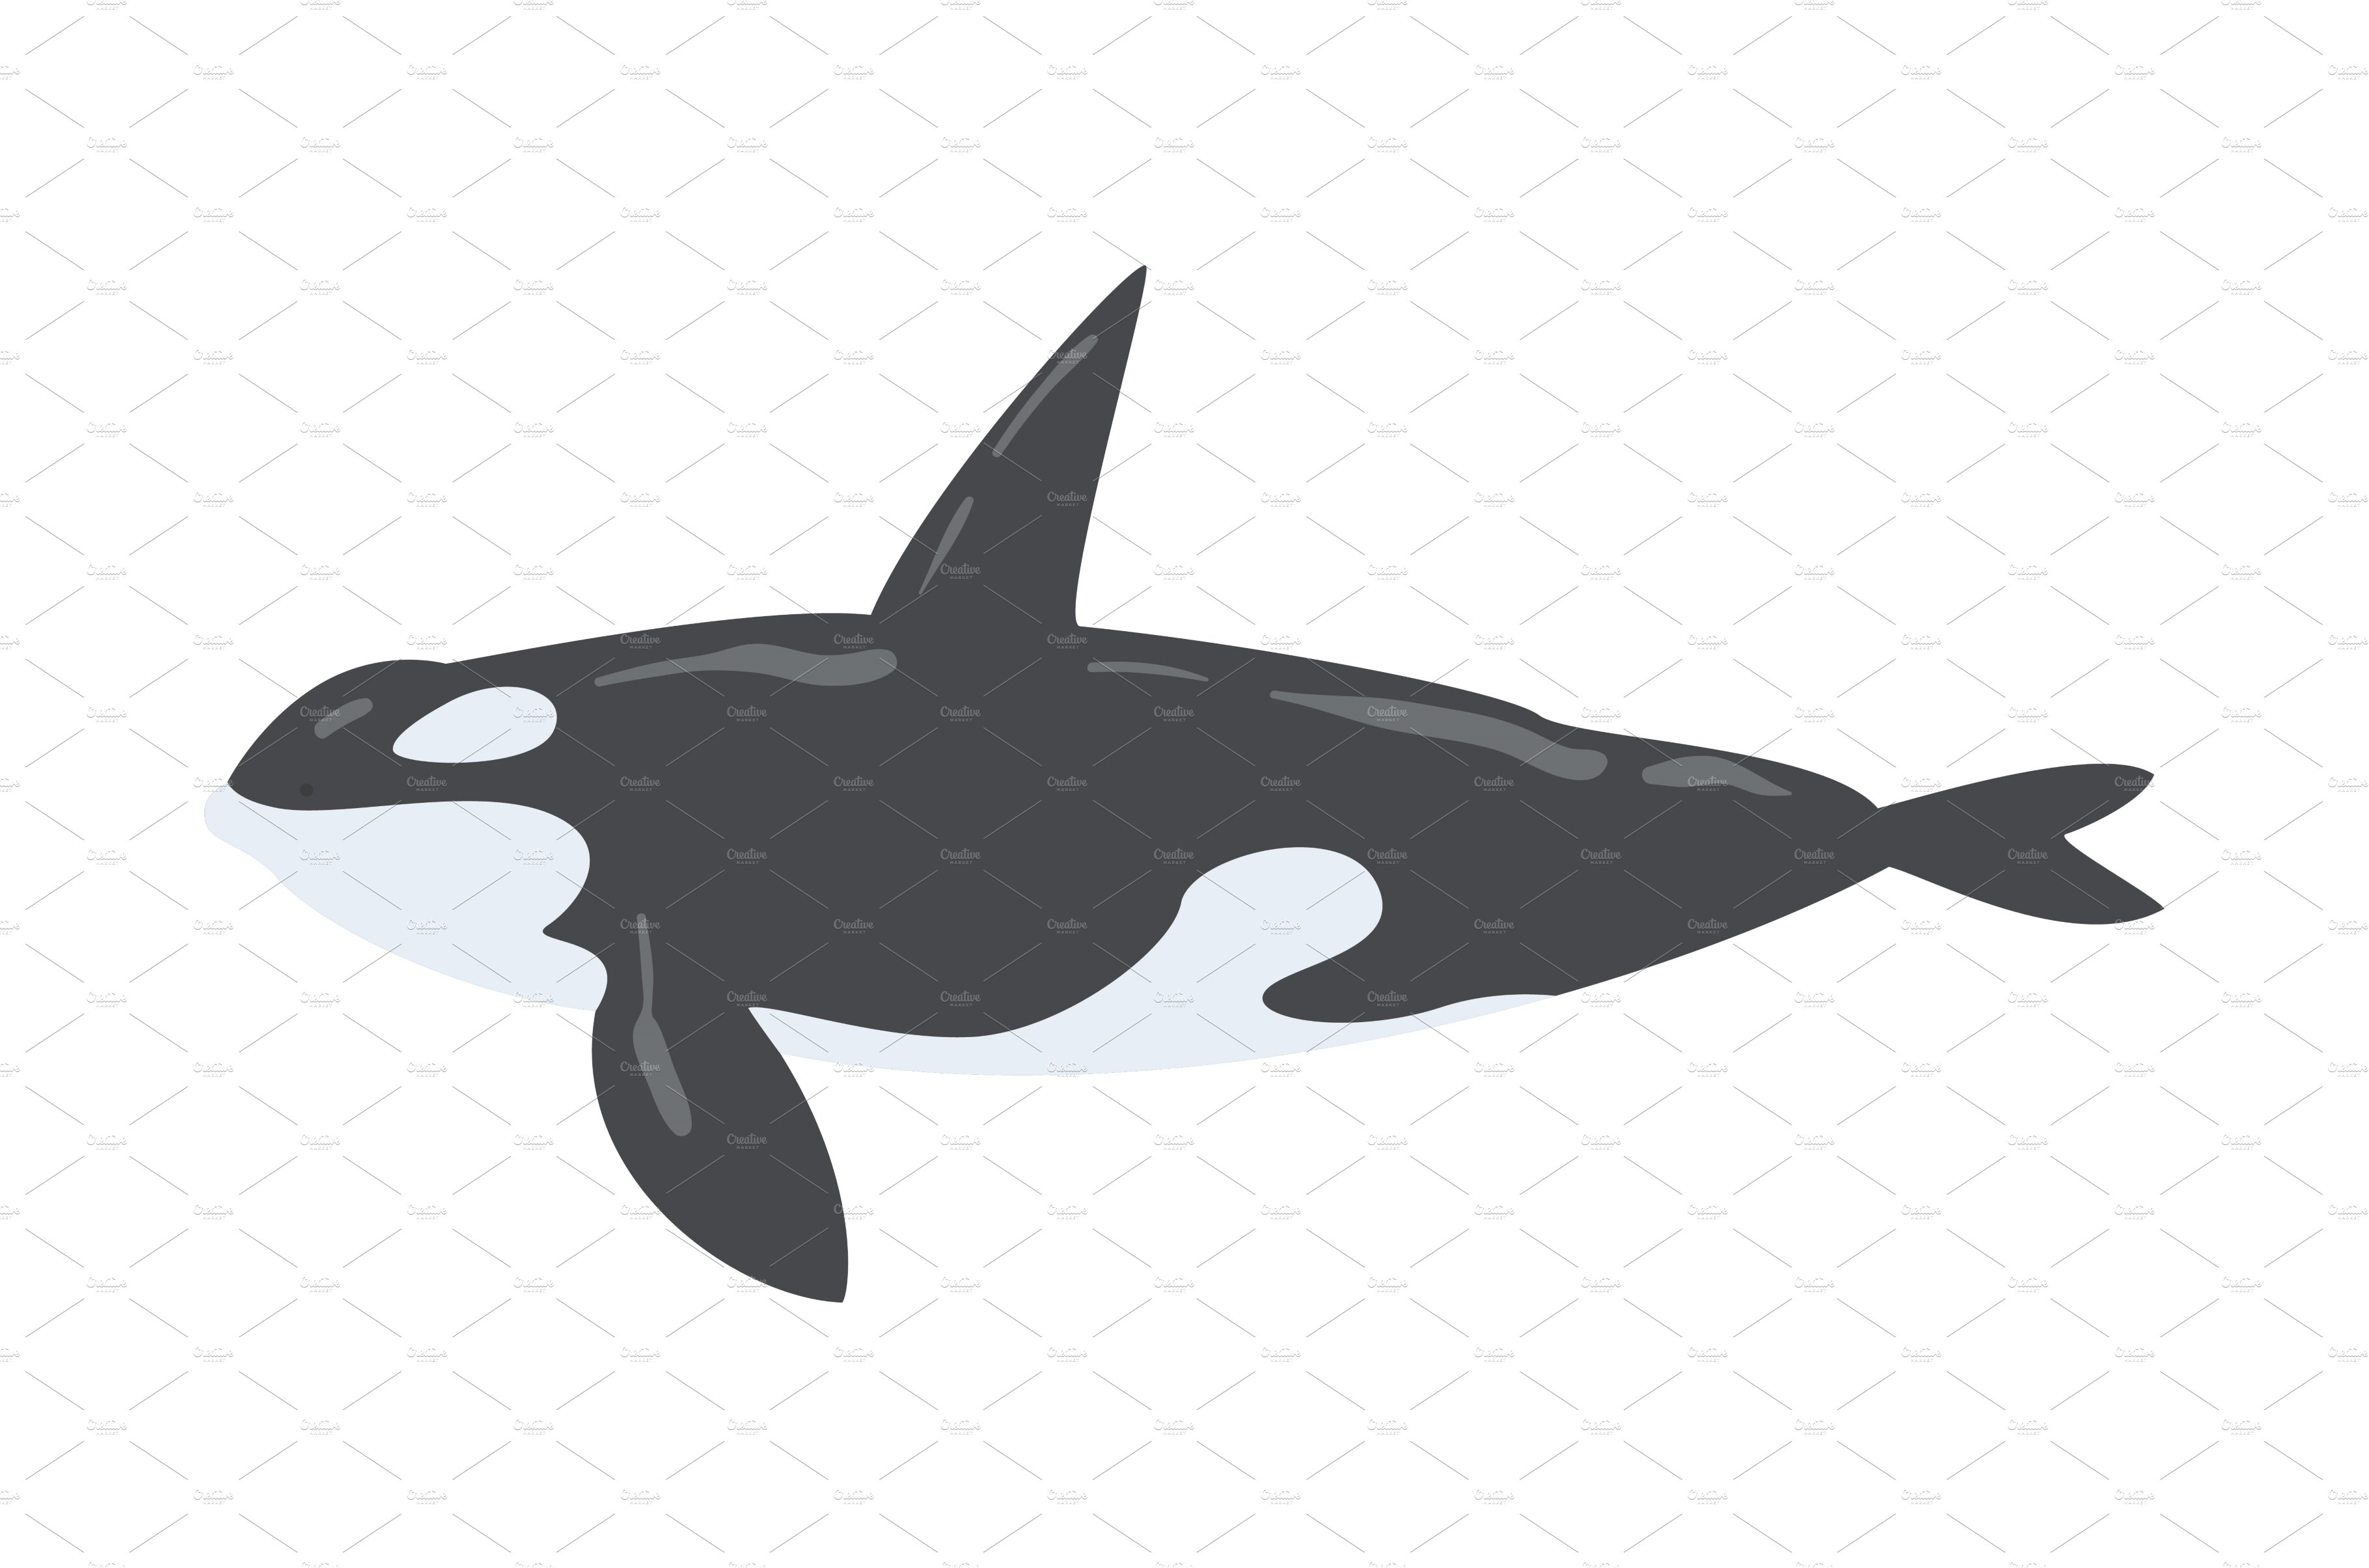 Orca Killer Whale Marine Mammal cover image.